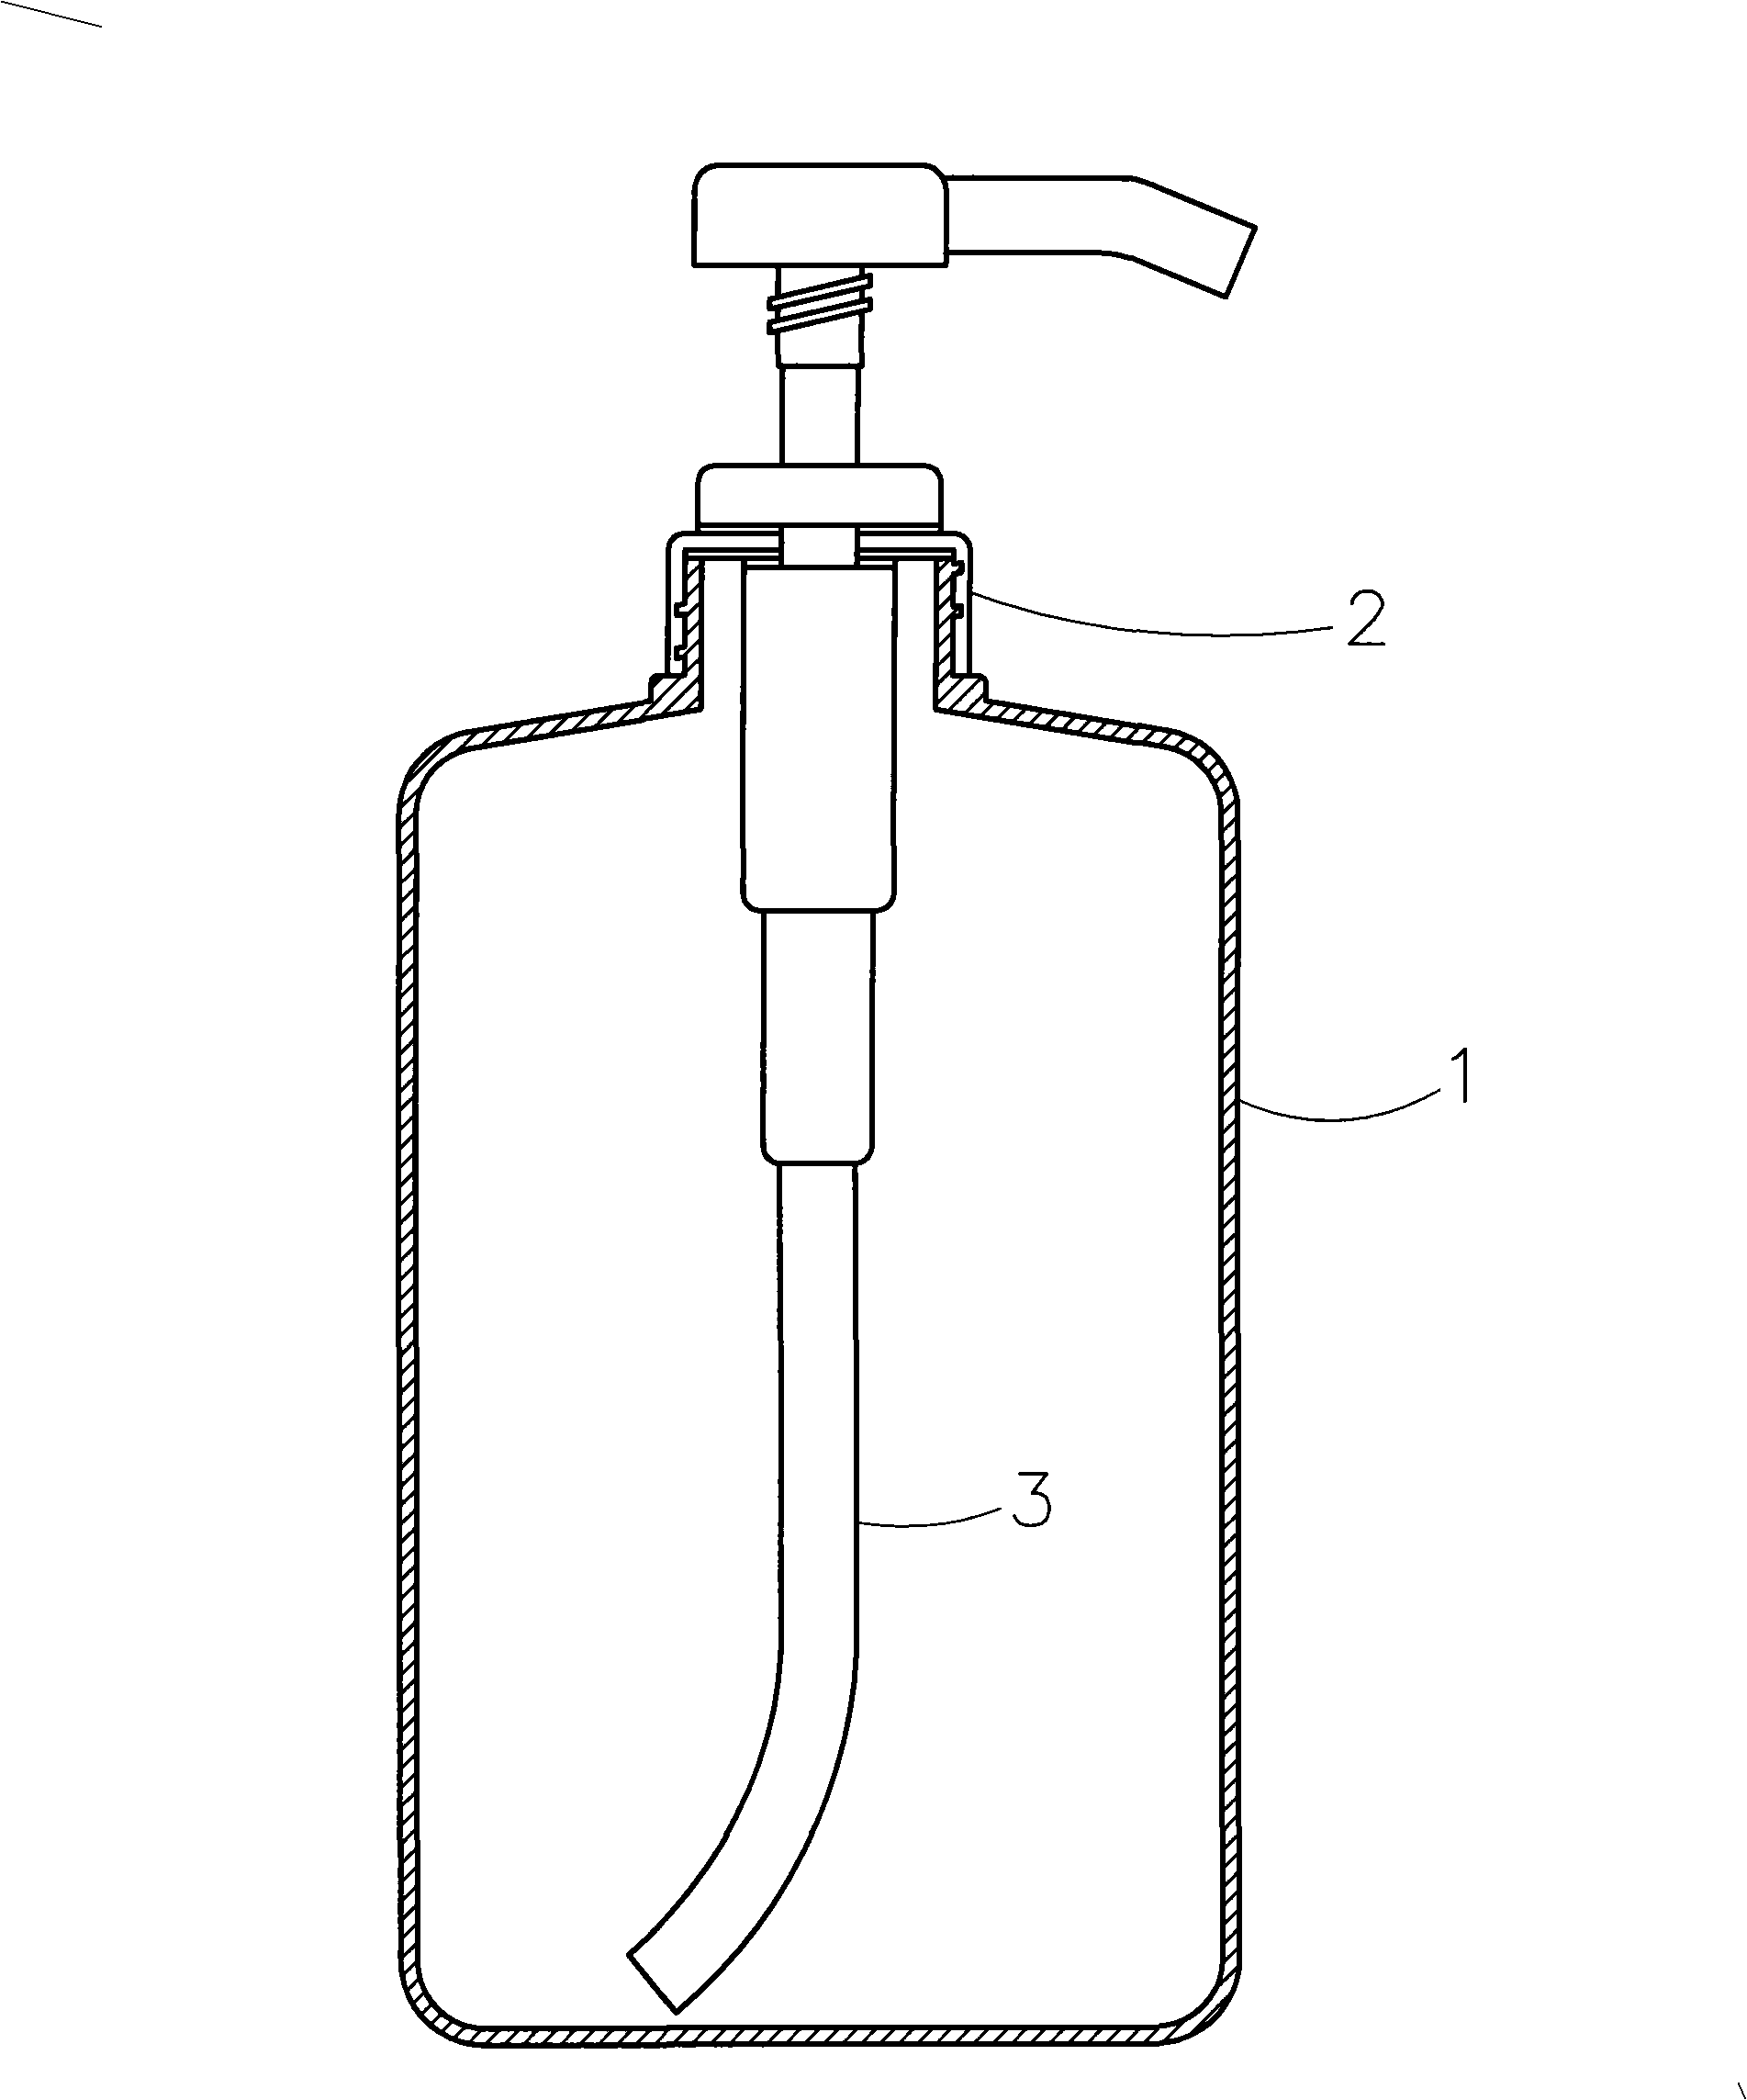 Press-fetching type liquid suction bottle